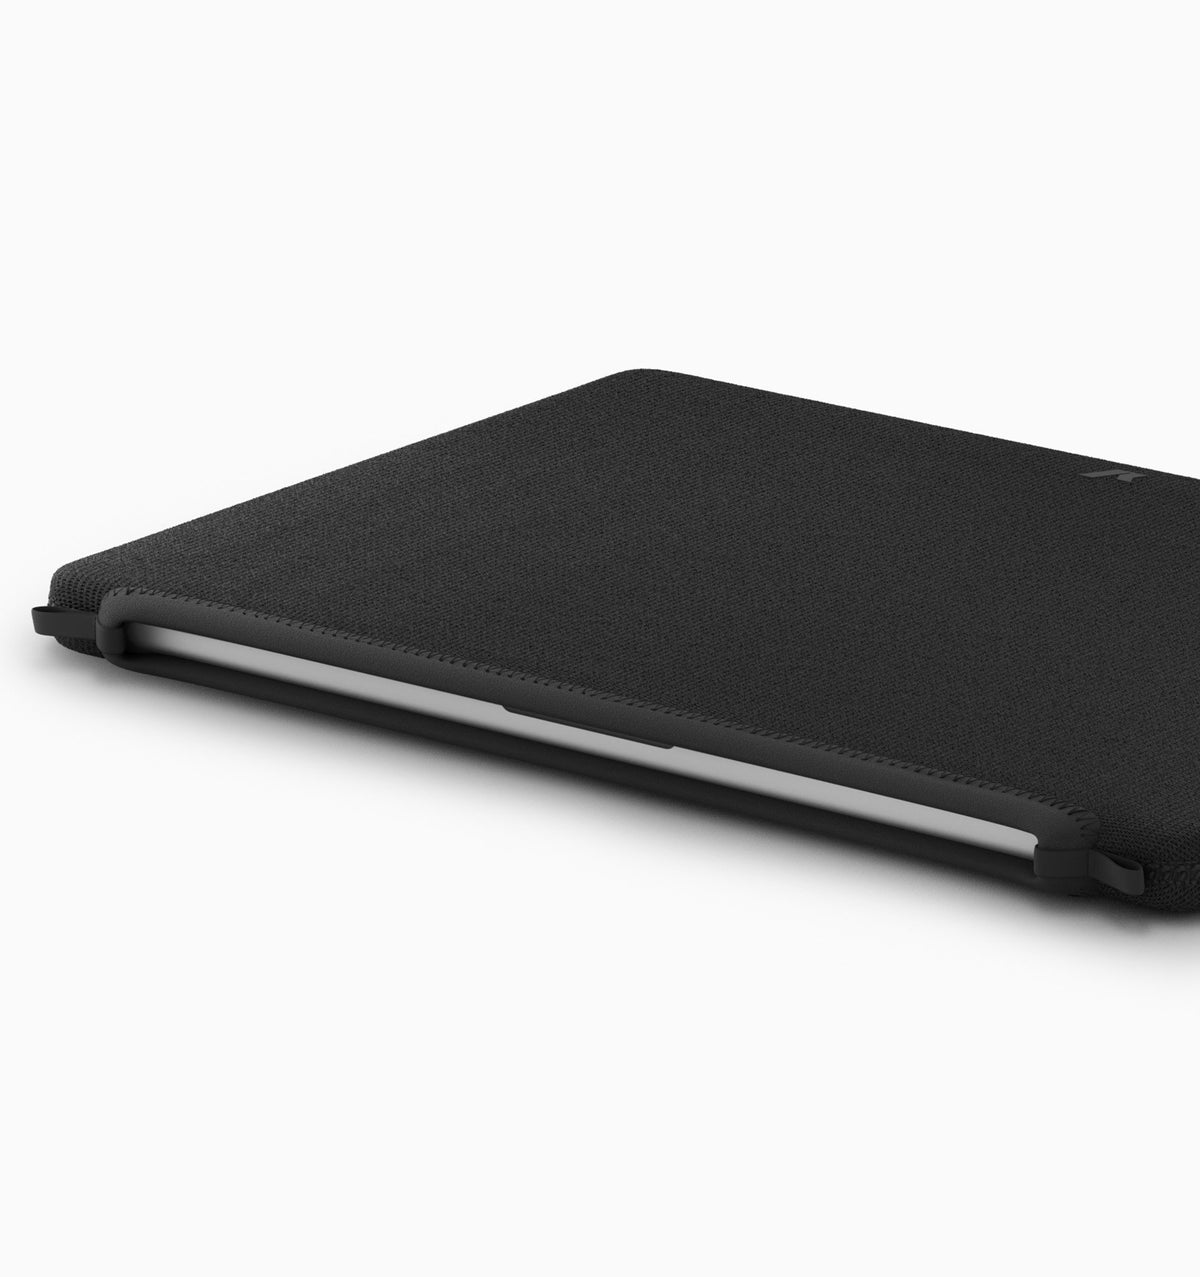 Rushfaster Laptop Sleeve For 14" MacBook Pro - Black